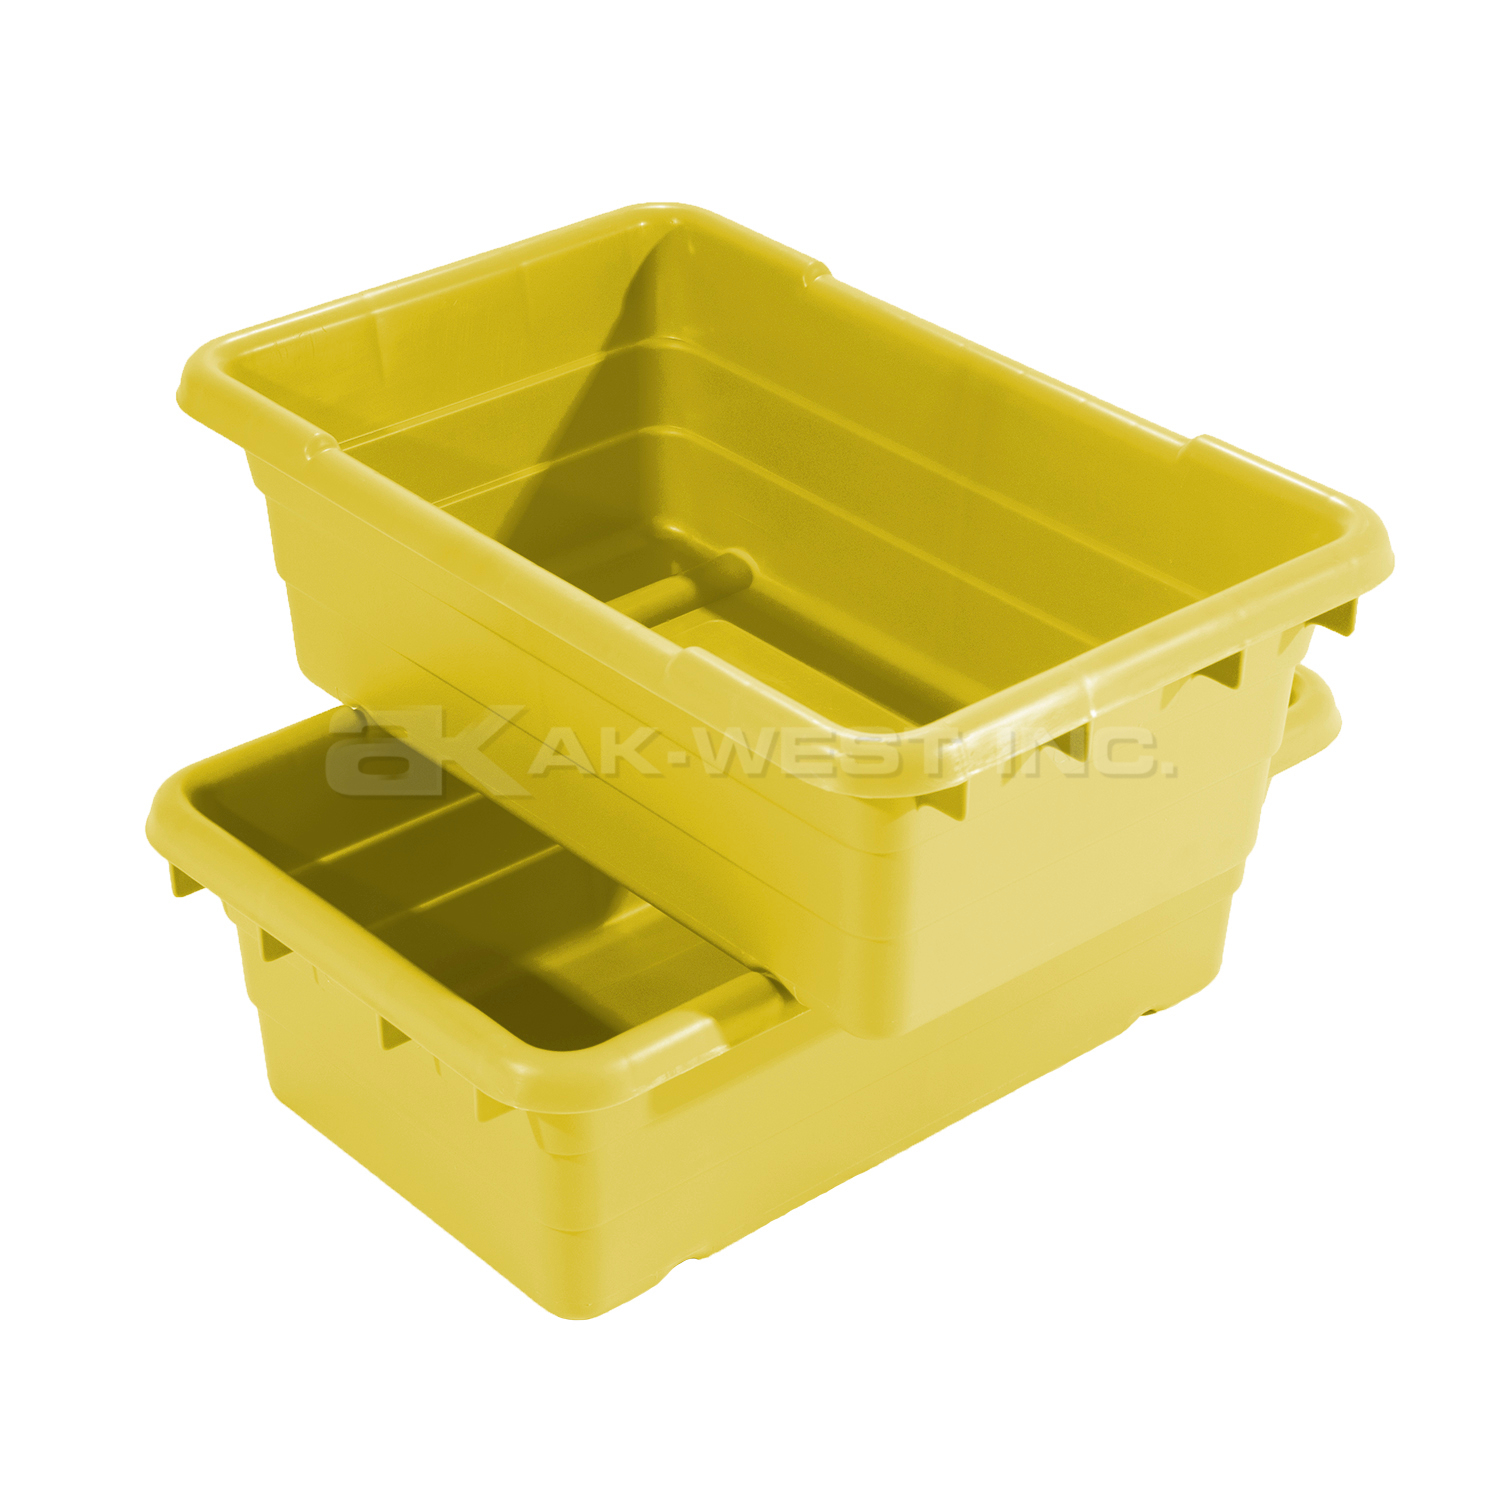 Yellow, 25" x 16" x 9", Jumbo Lug Cross Stack and Nest Container